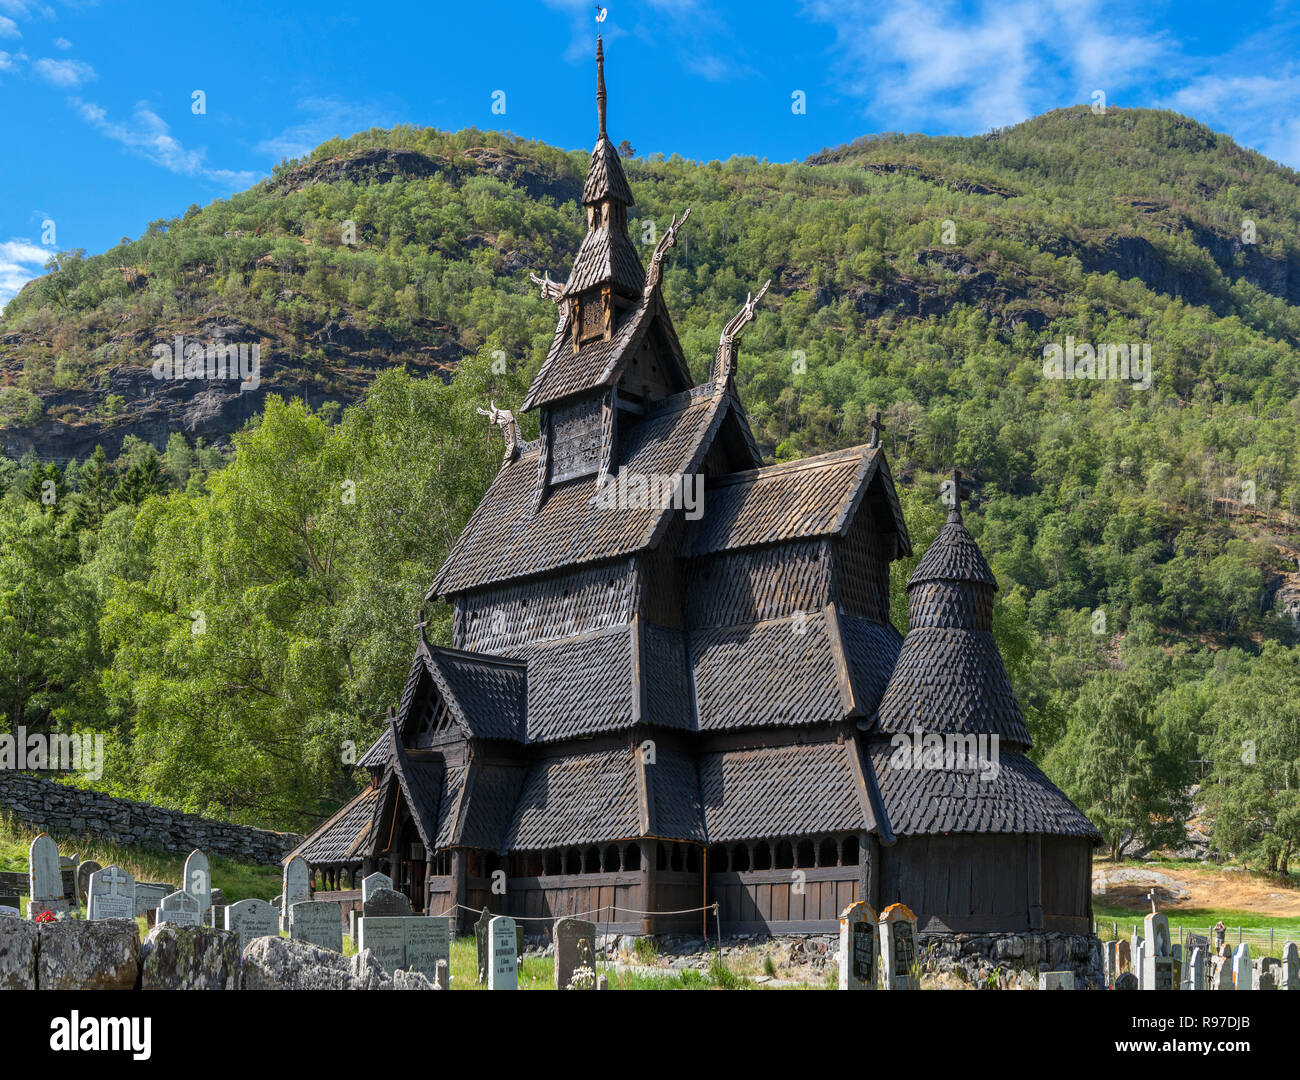 Borgund Stave Church (Borgund stavkyrkje), Borgund, Lærdal, Norway Stock Photo